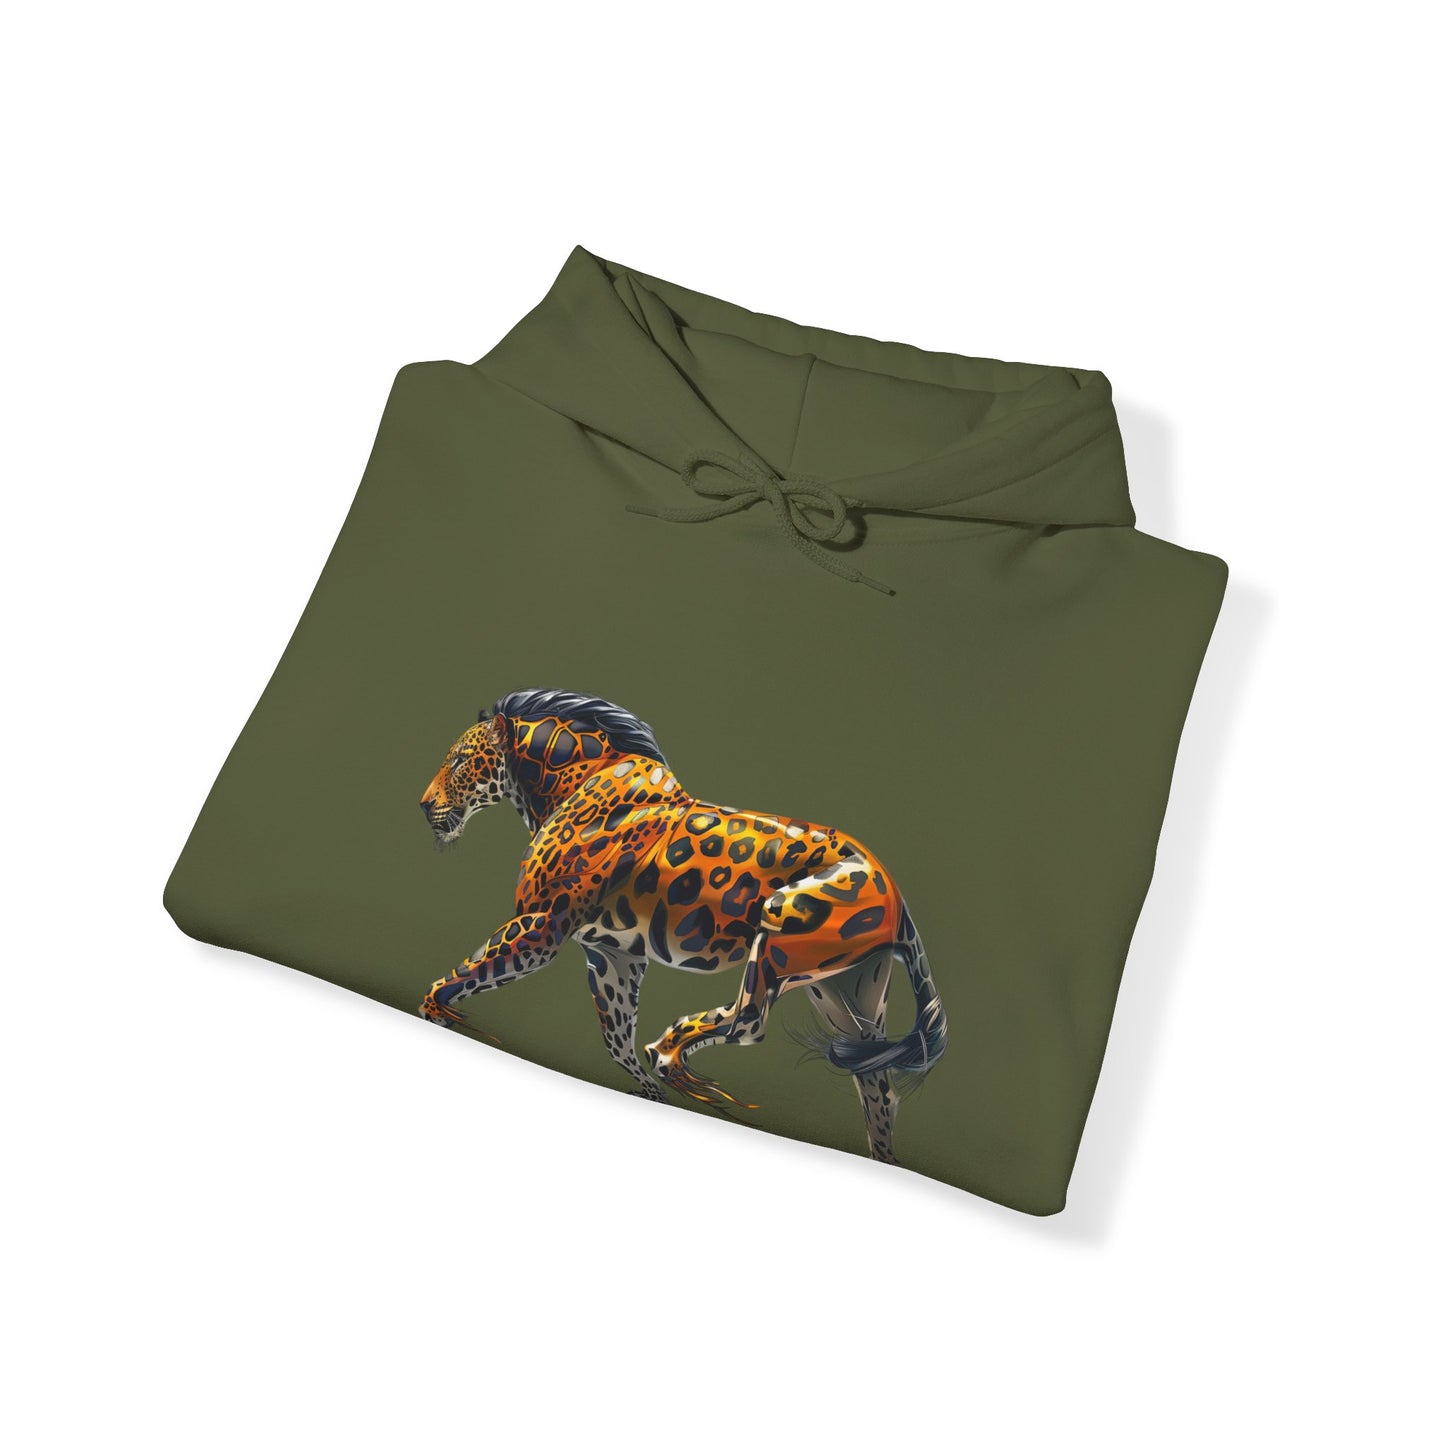 Unisex Heavy Blend™ Hooded Sweatshirt: Leopard/Stallion Hybrid